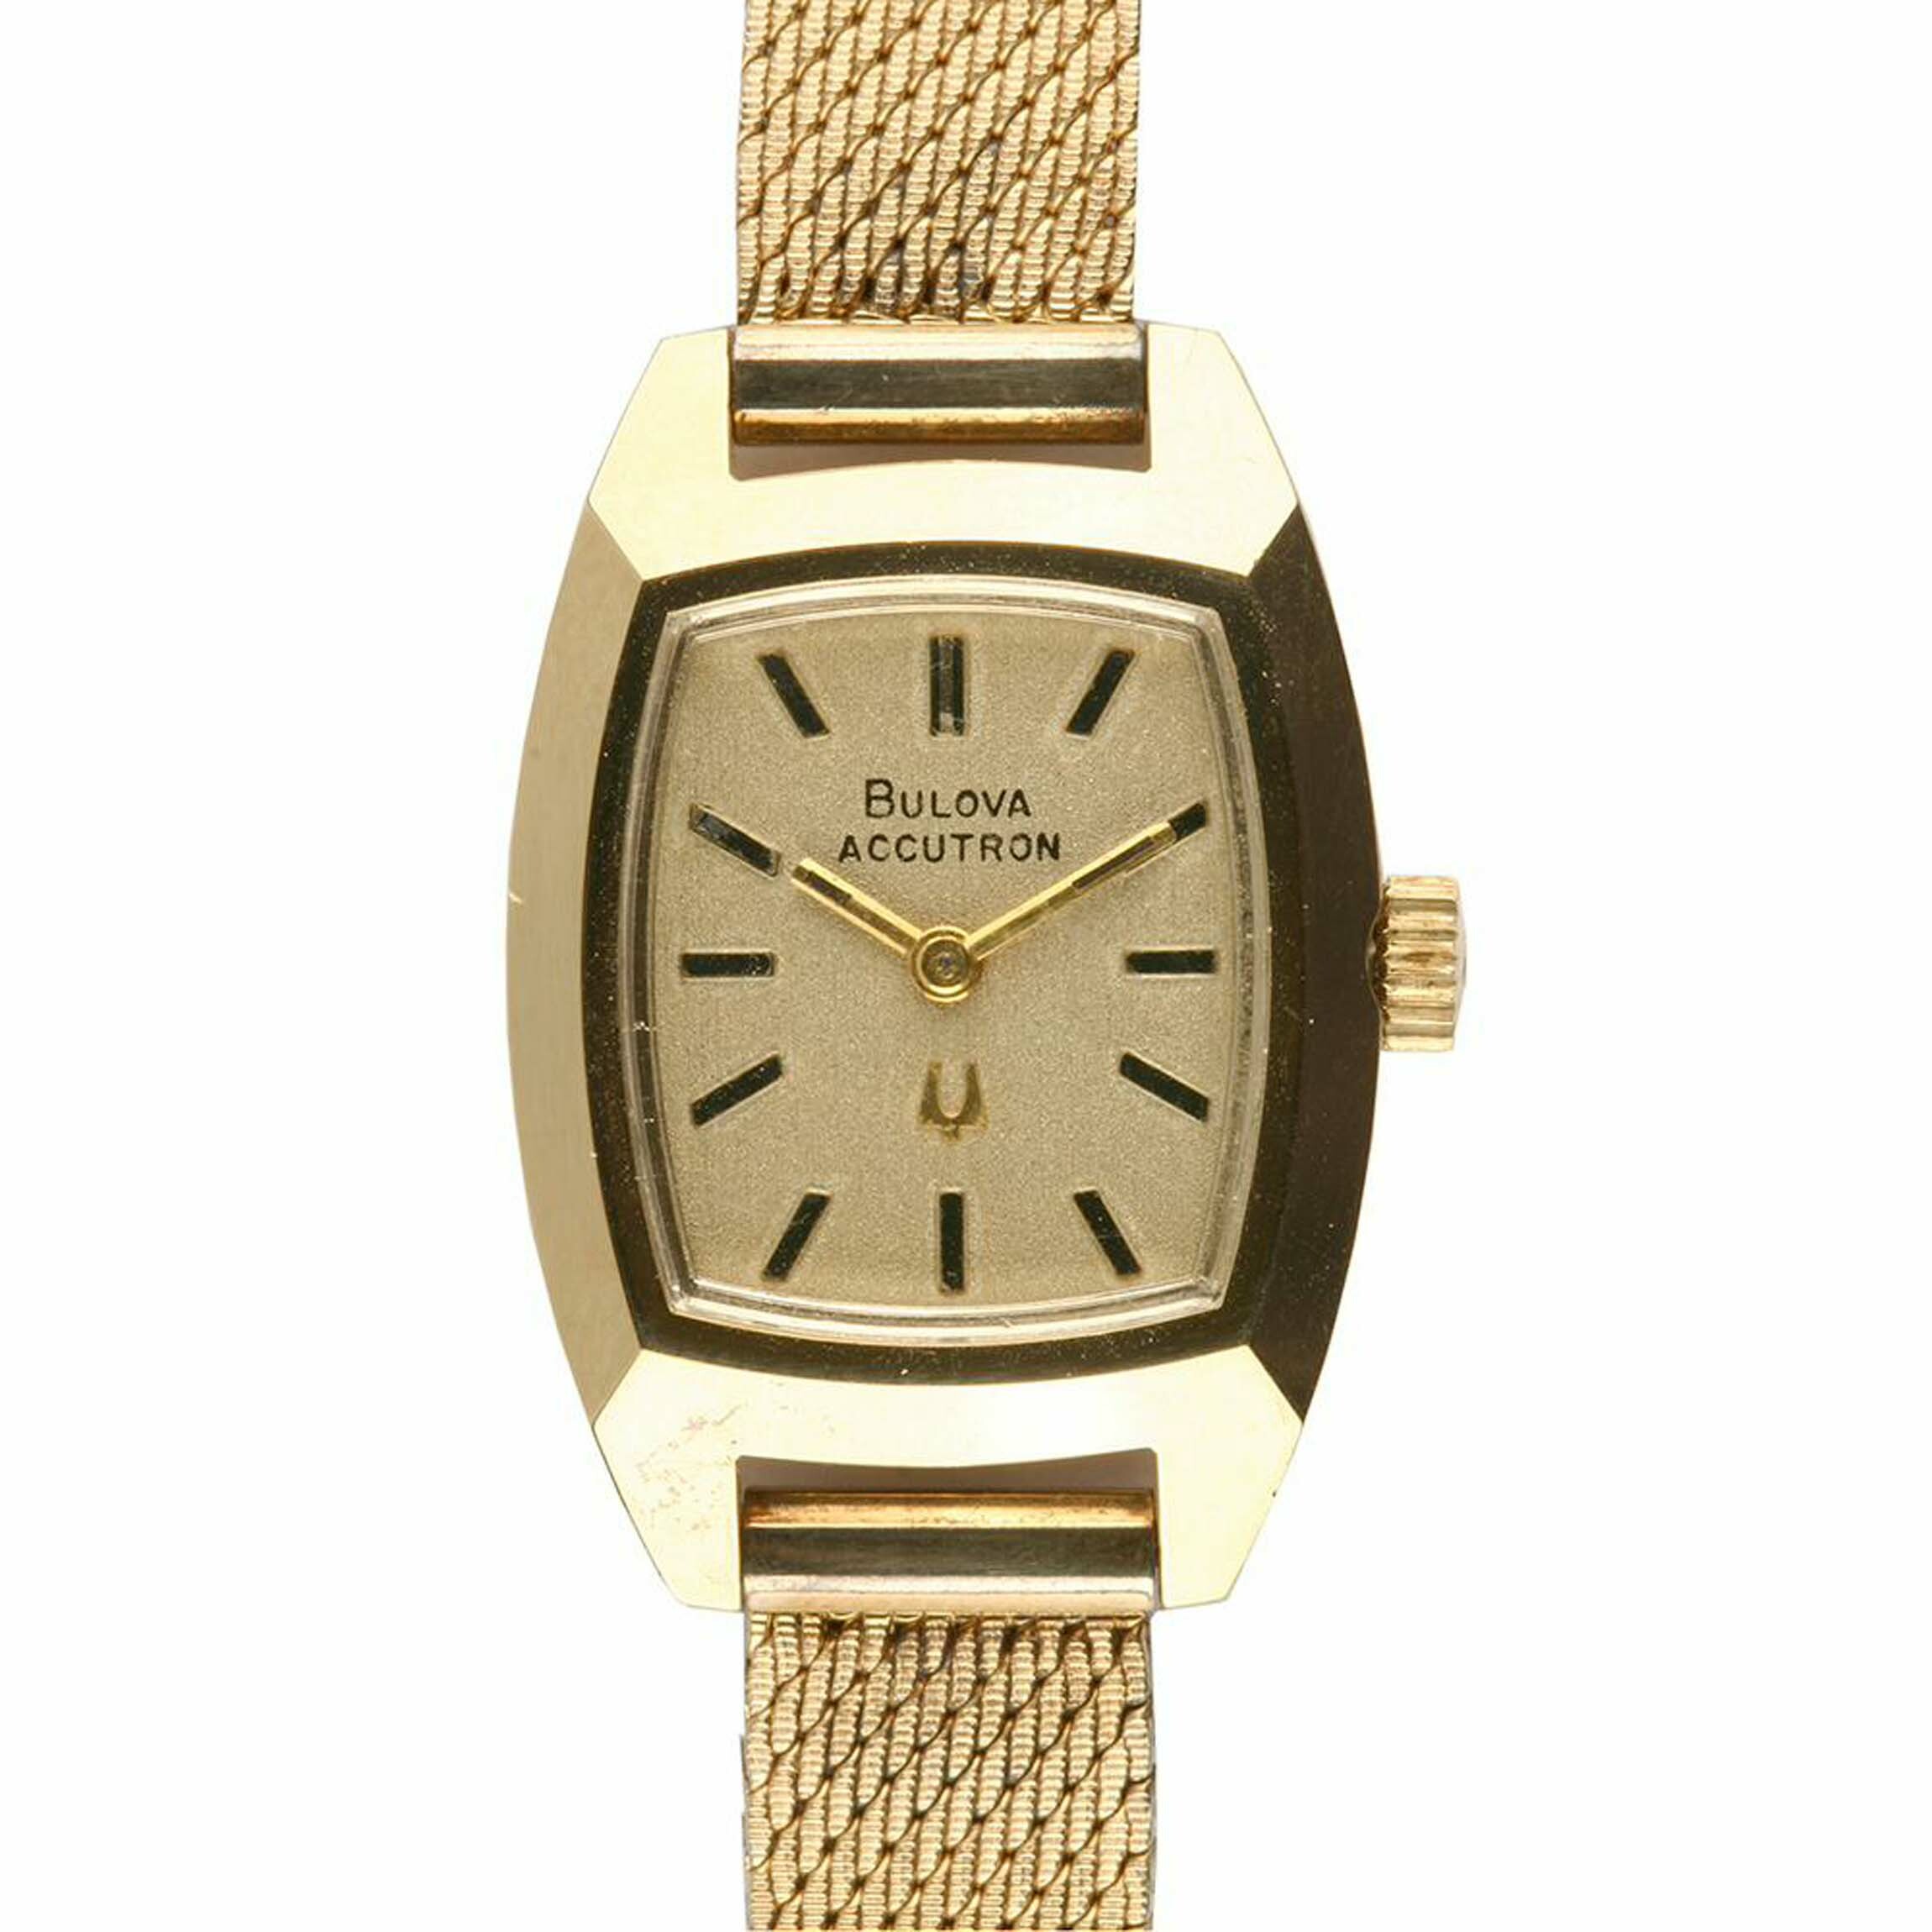 Armbanduhr, Bulova, USA, um 1973 (Deutsches Uhrenmuseum CC BY-SA)